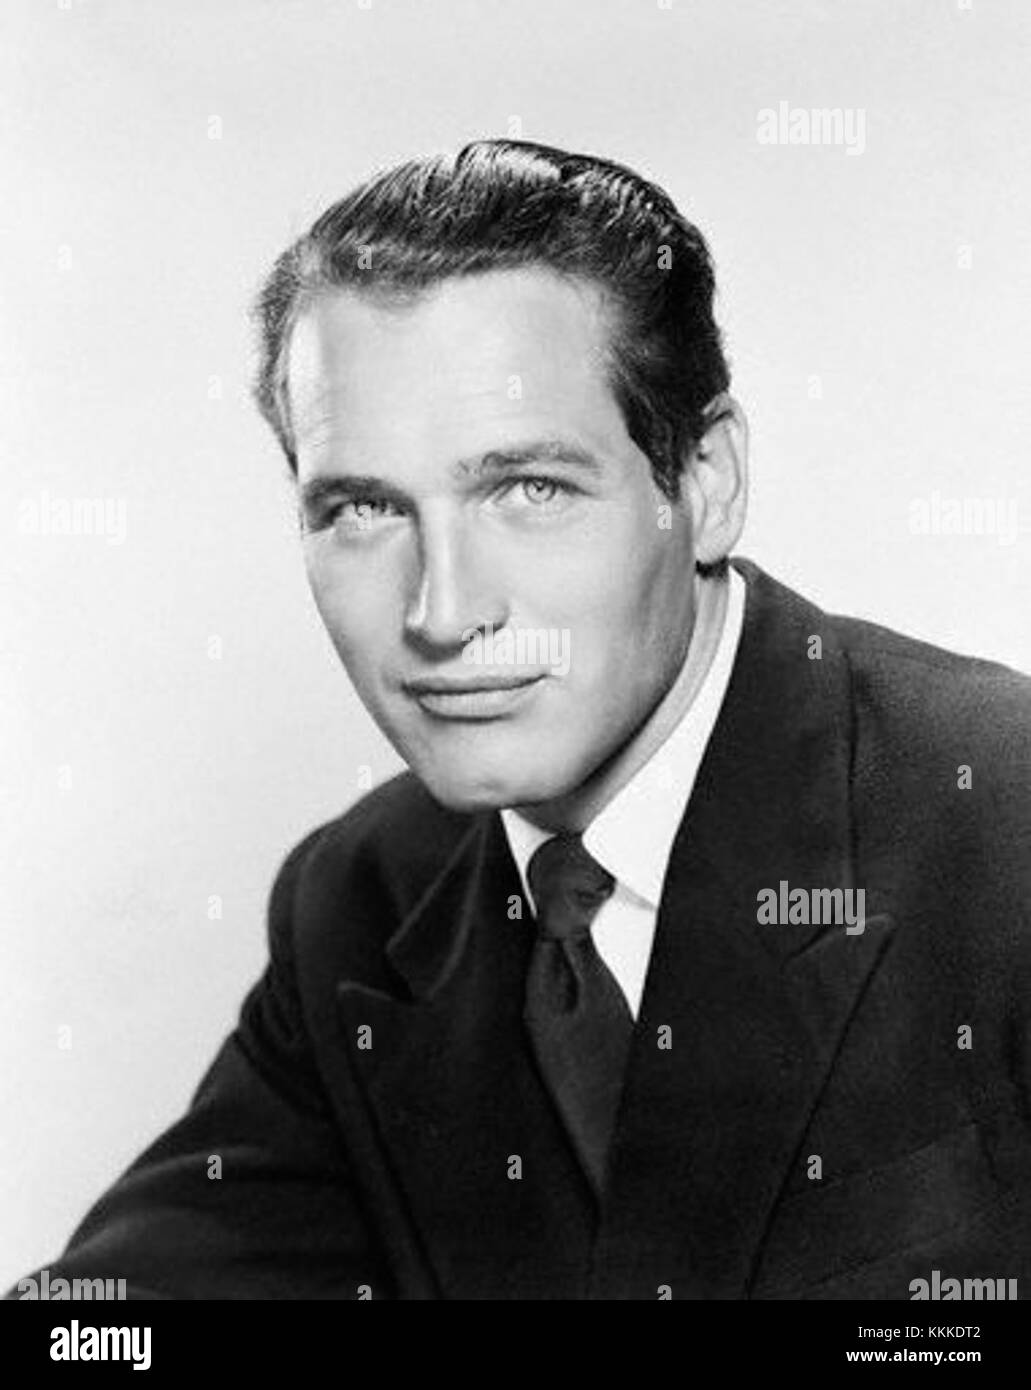 Paul Newman Publicity Still von 1958. November 1958 Paul Newman - 1958 Stockfoto